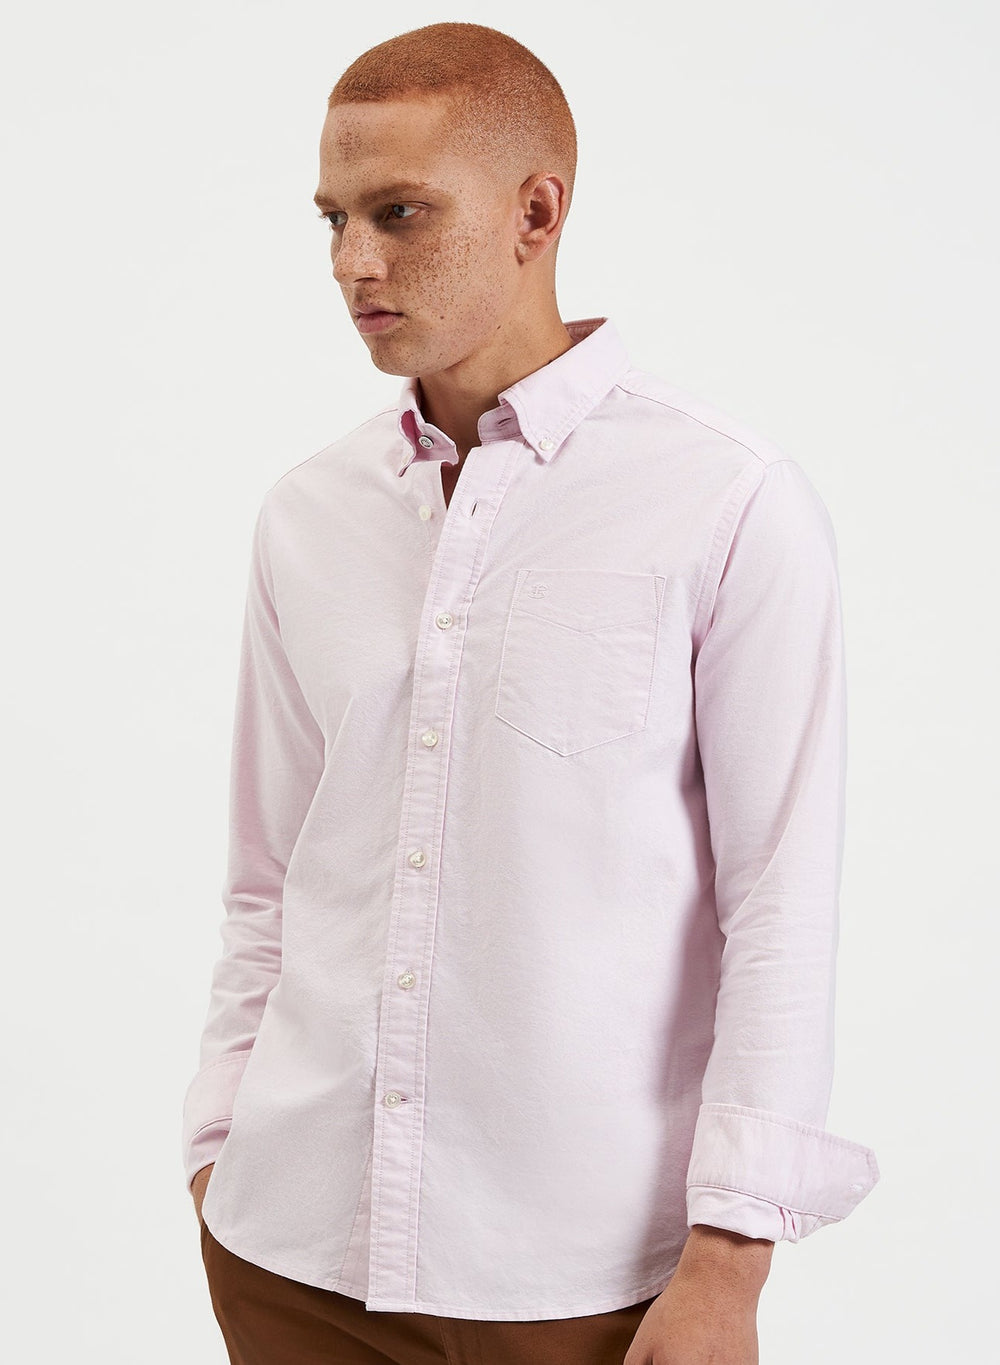 Ben Sherman, Brighton Oxford Shirt, Men's Pink Oxford Shirt, commuter button down, pink, front 